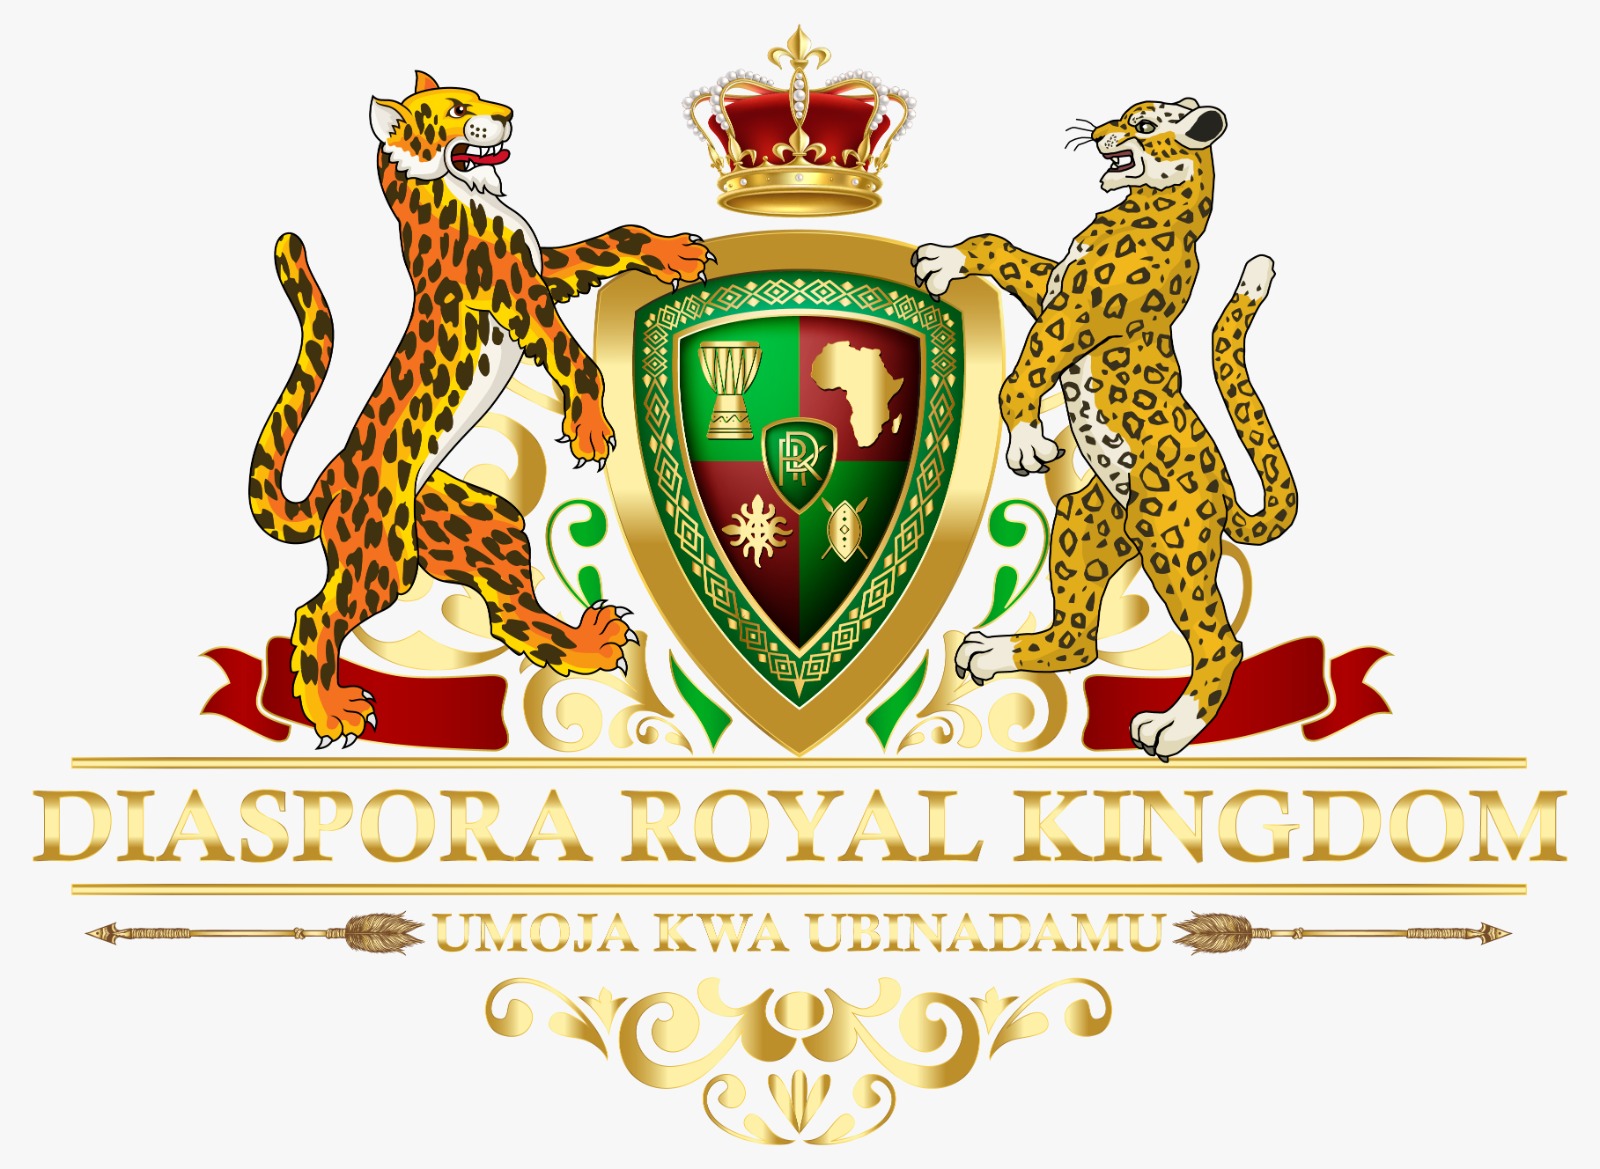 Diasporal Royal Kingdom